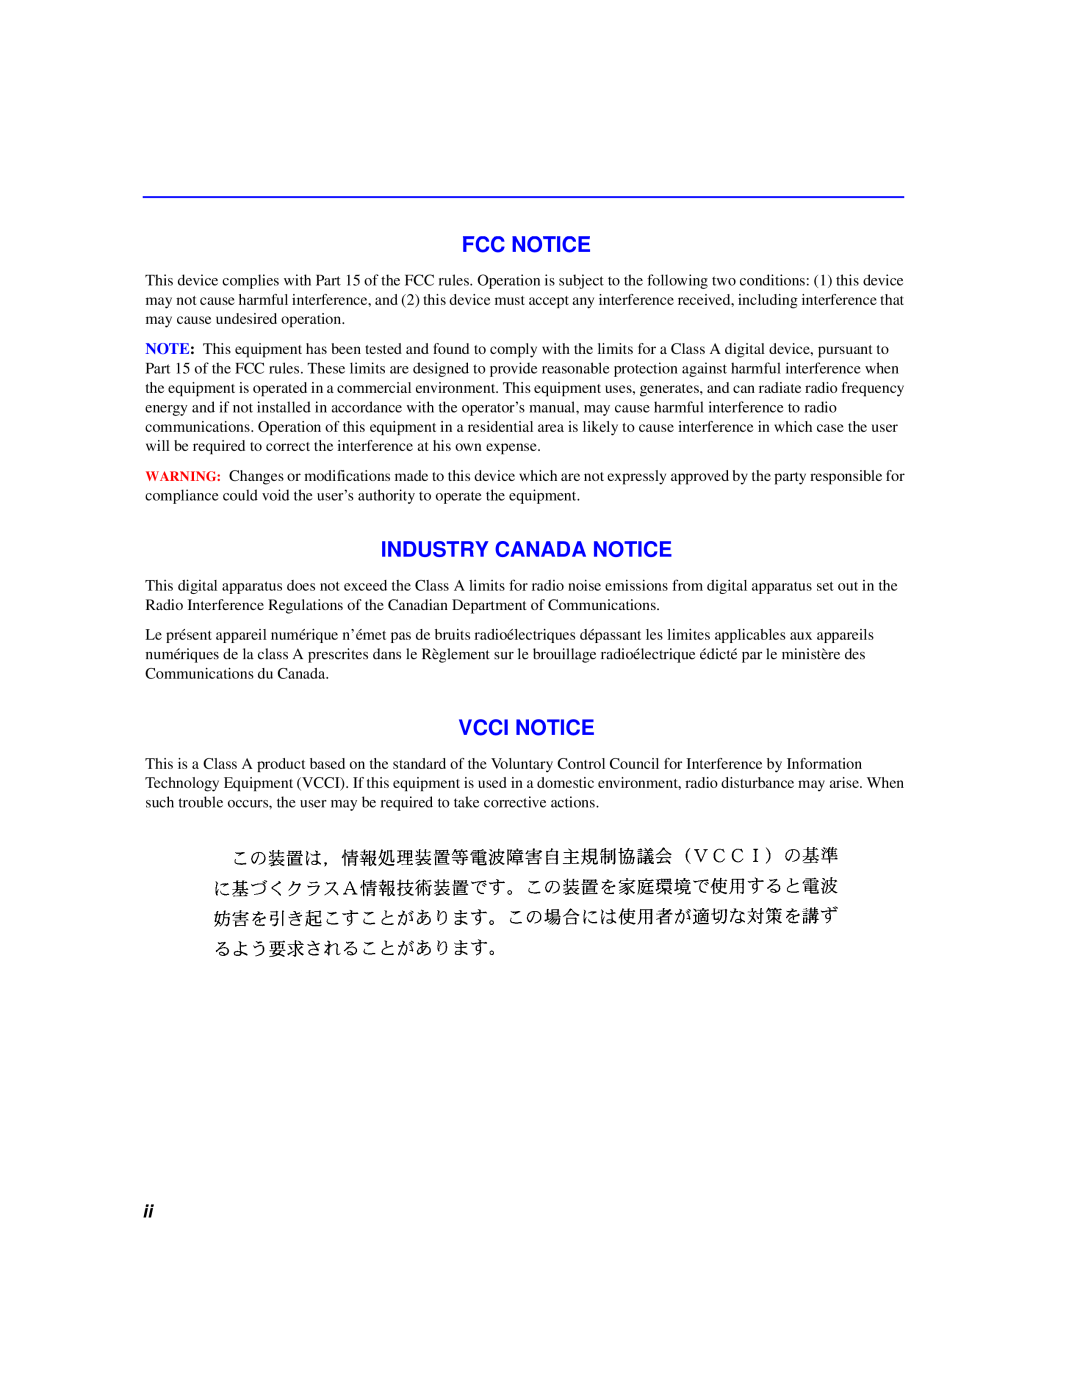 Cabletron Systems 6000 manual Fcc Notice, Industry Canada Notice, Vcci Notice 